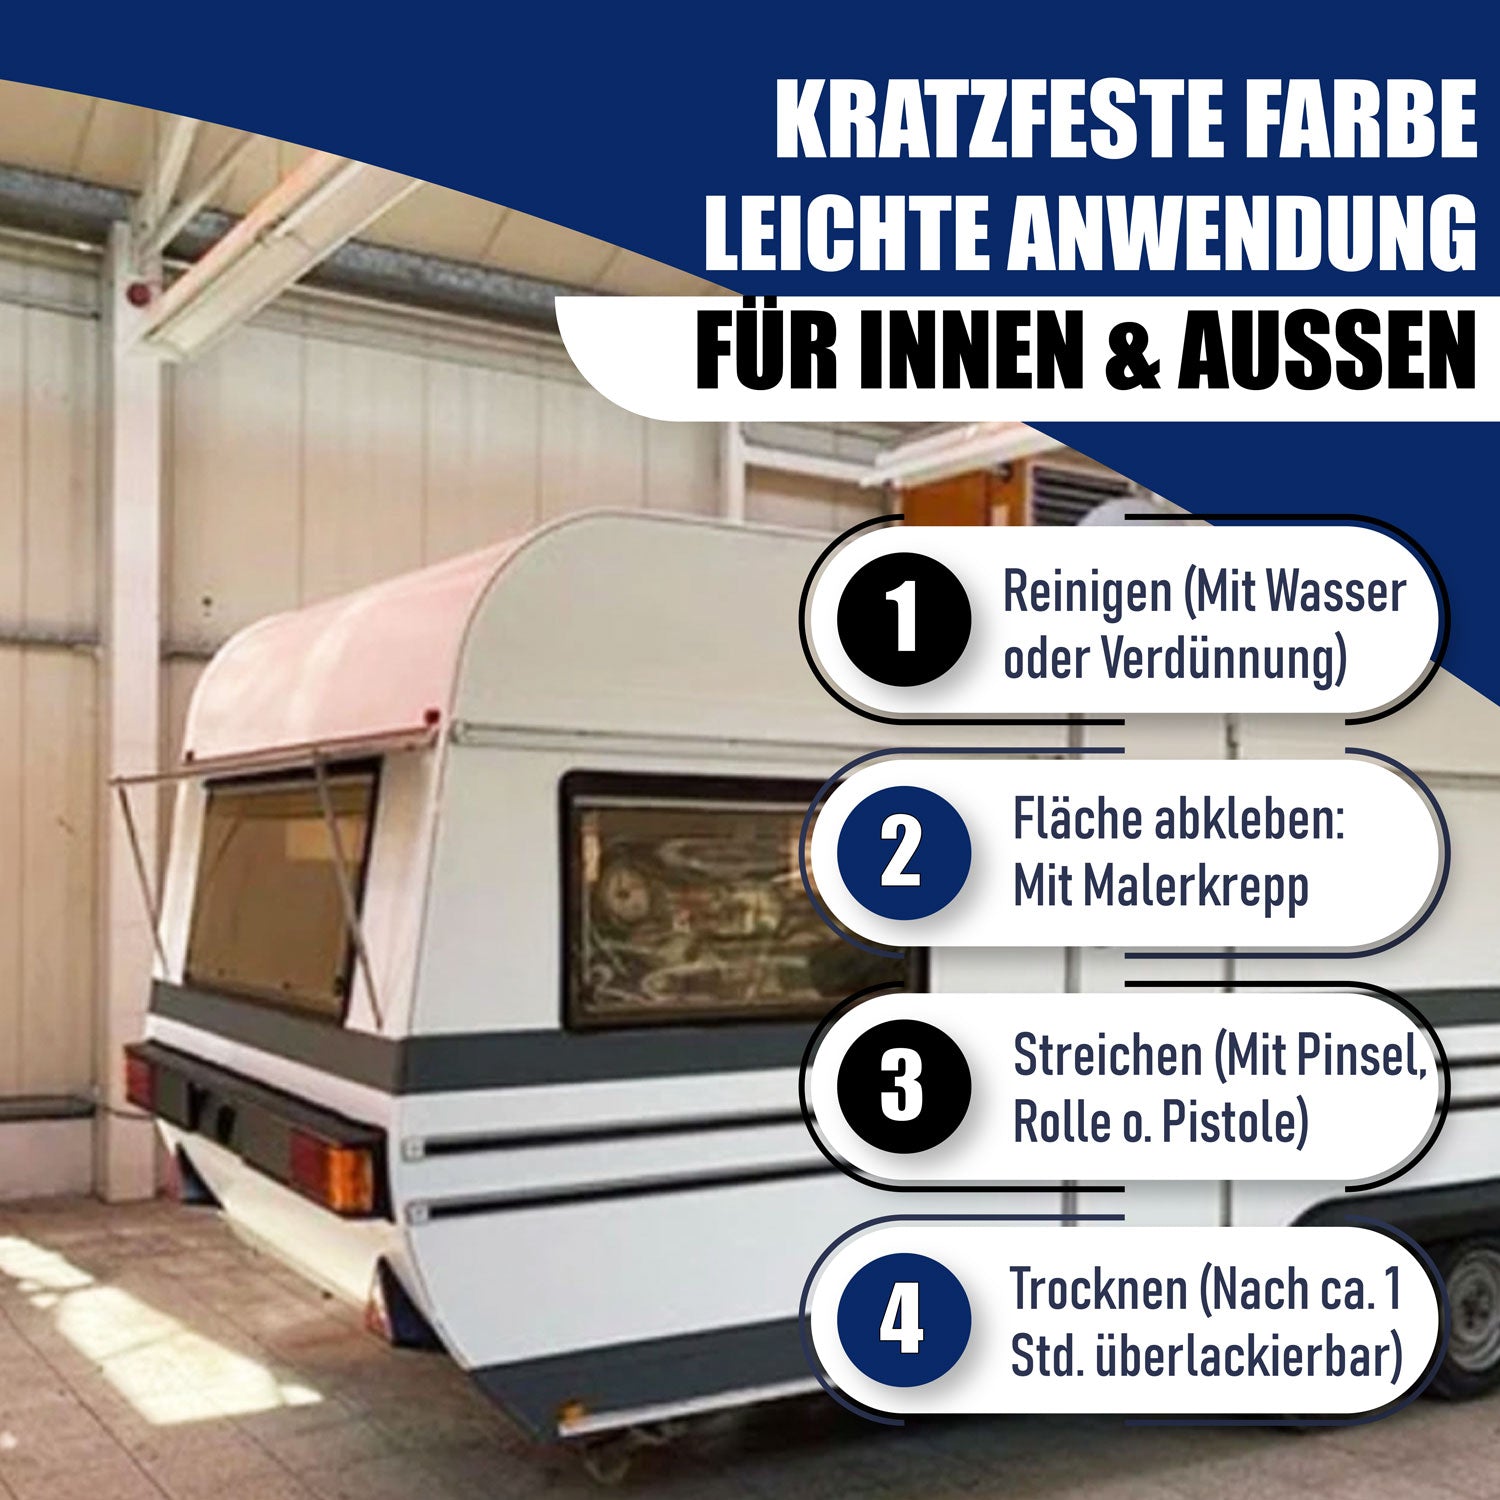 Hamburger Lack-Profi 2K Autolack in Eisengrau RAL 7011 mit Lackierset (X300) & Verdünnung (1 L) - 30% Sparangebot